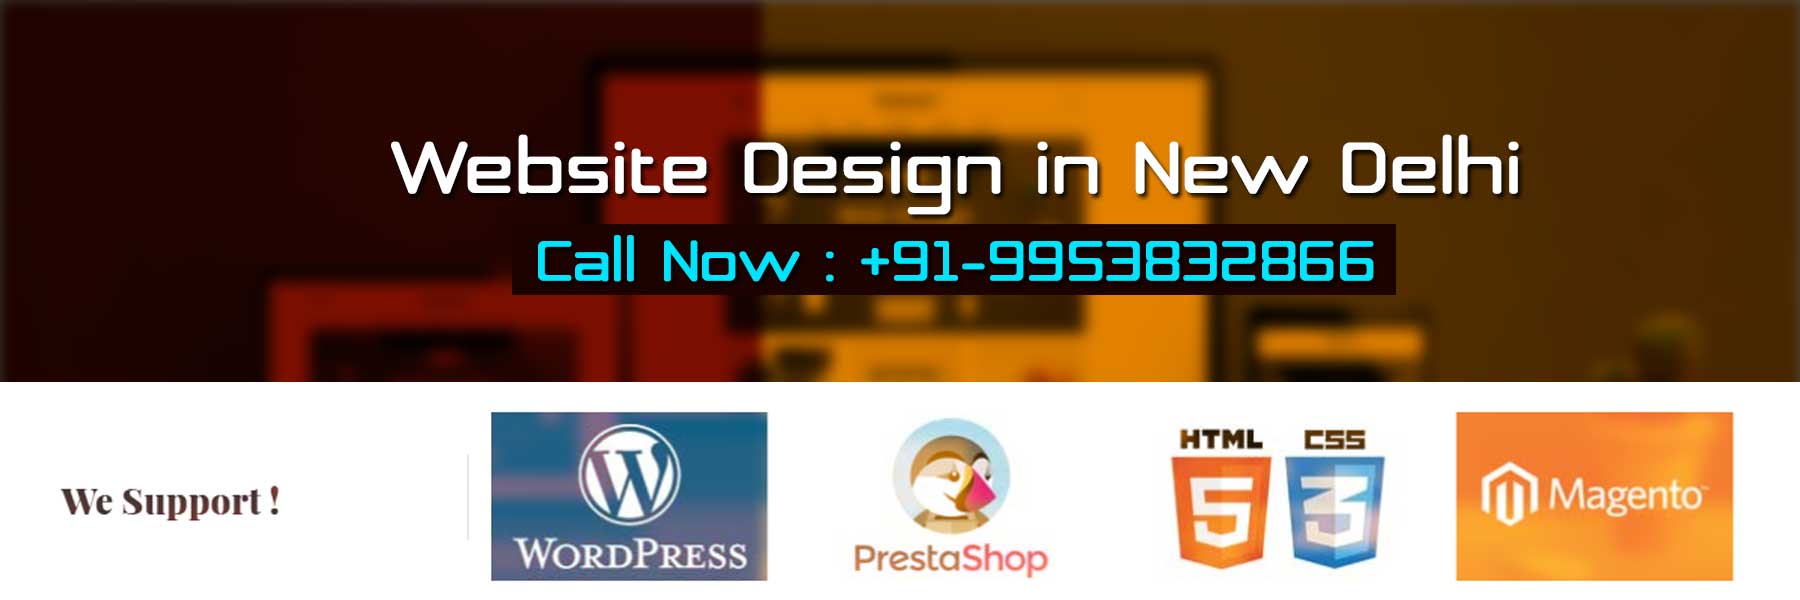 Website Design in New Delhi